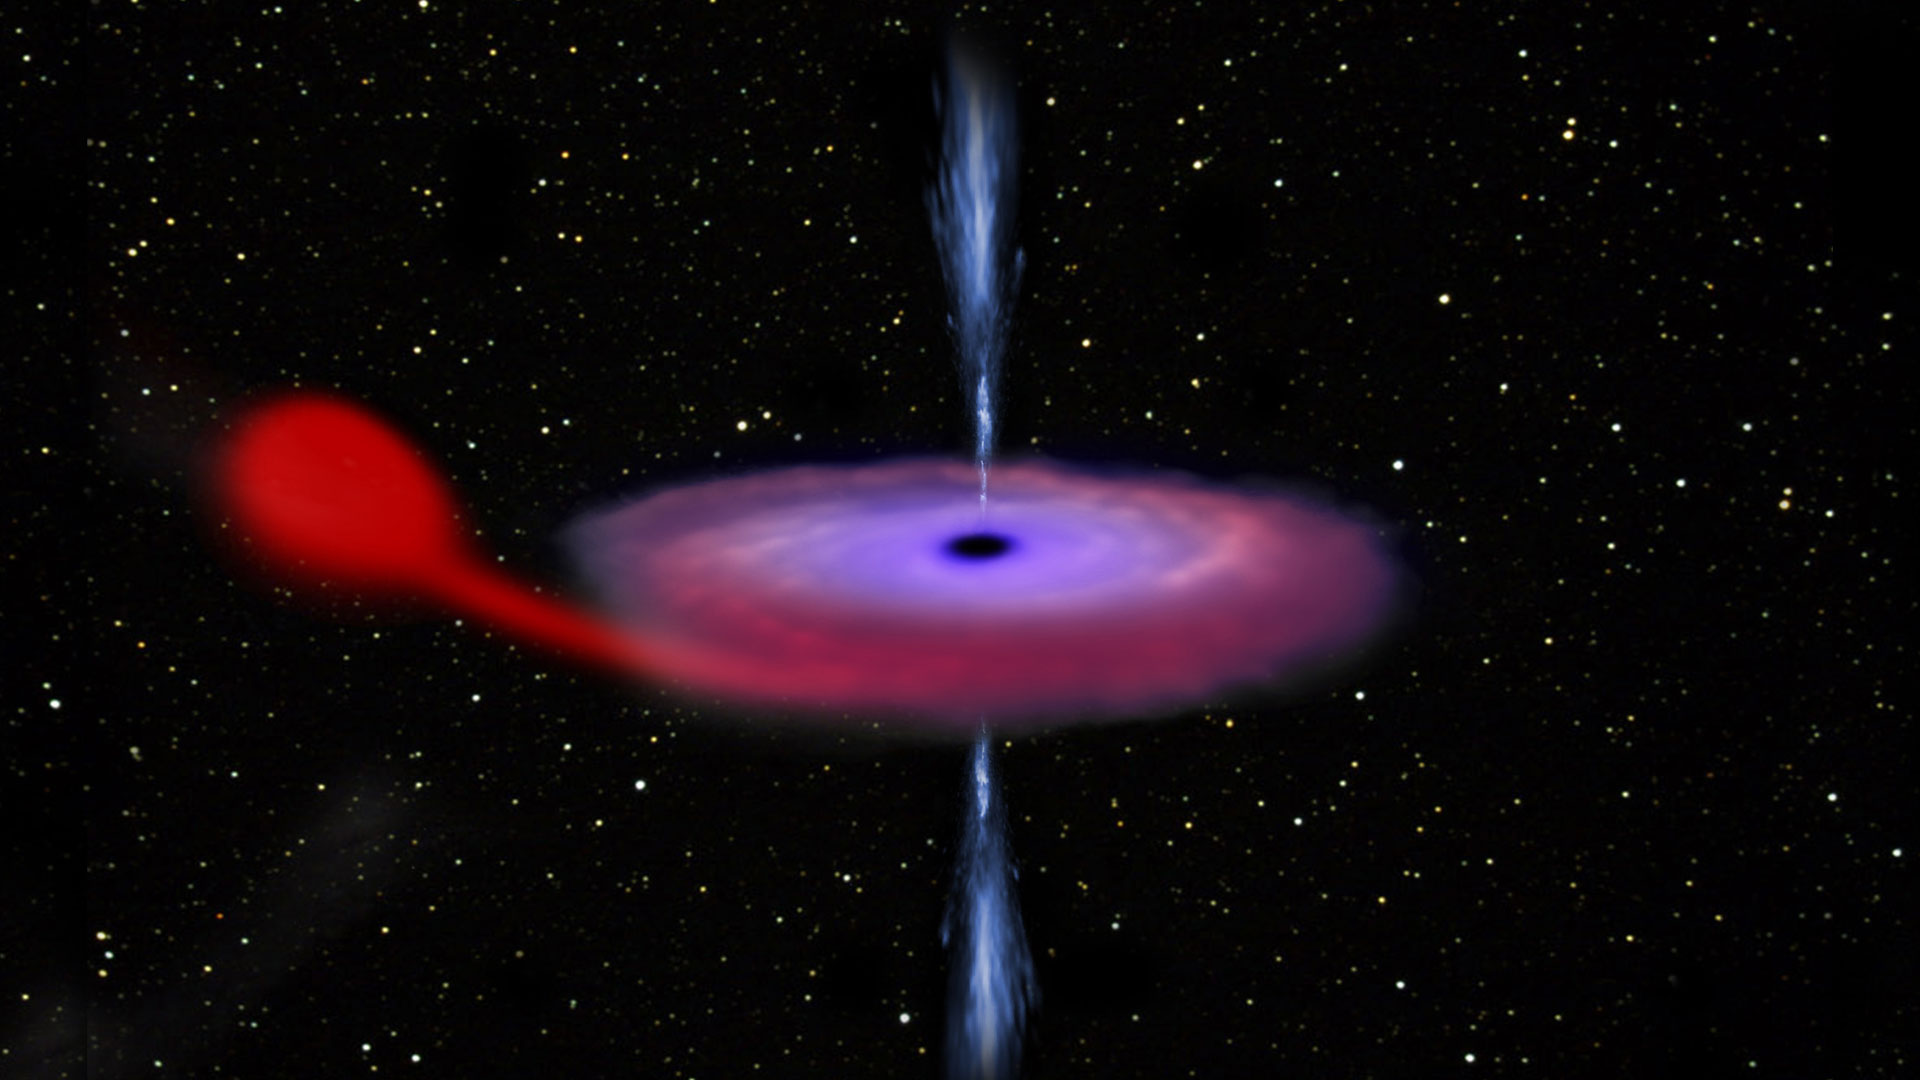 Black hole with stellar companion